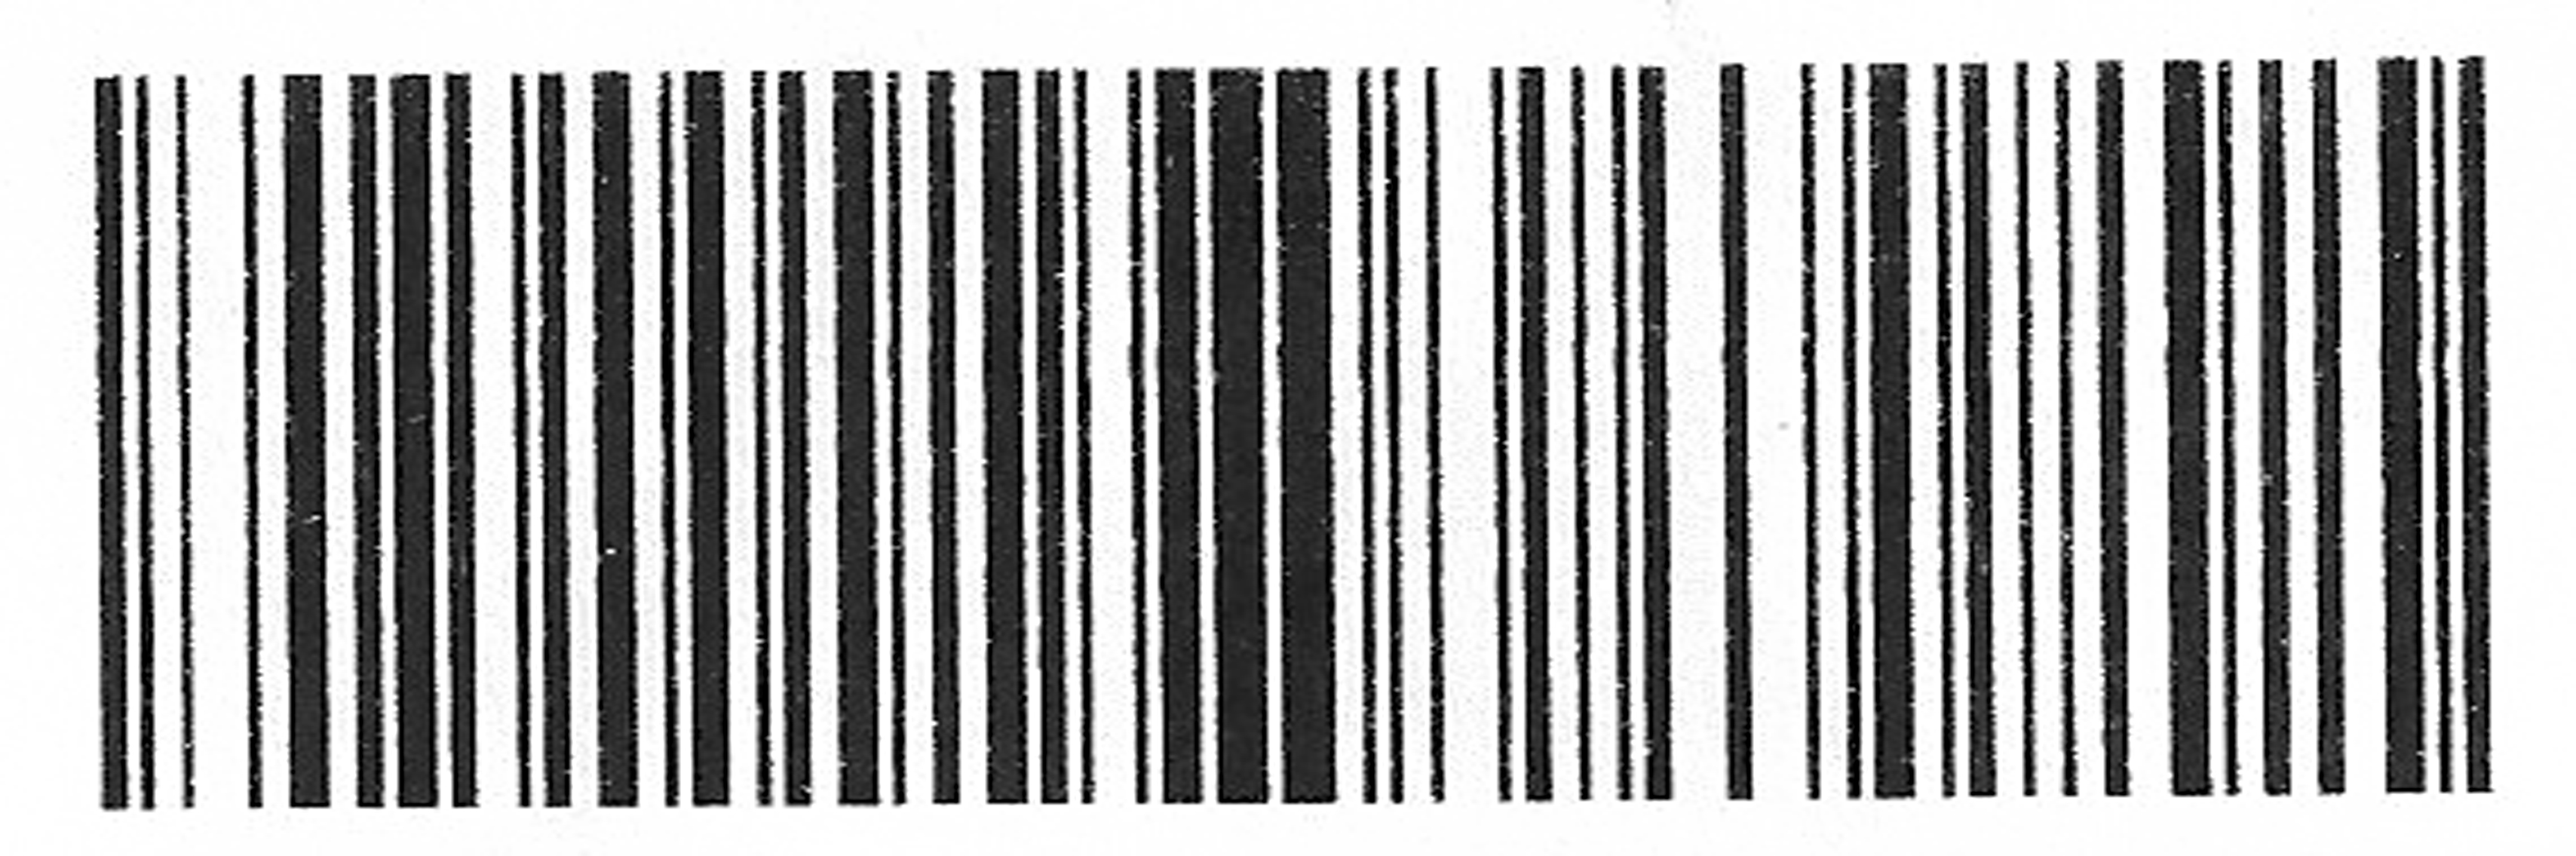 barcode books clipart